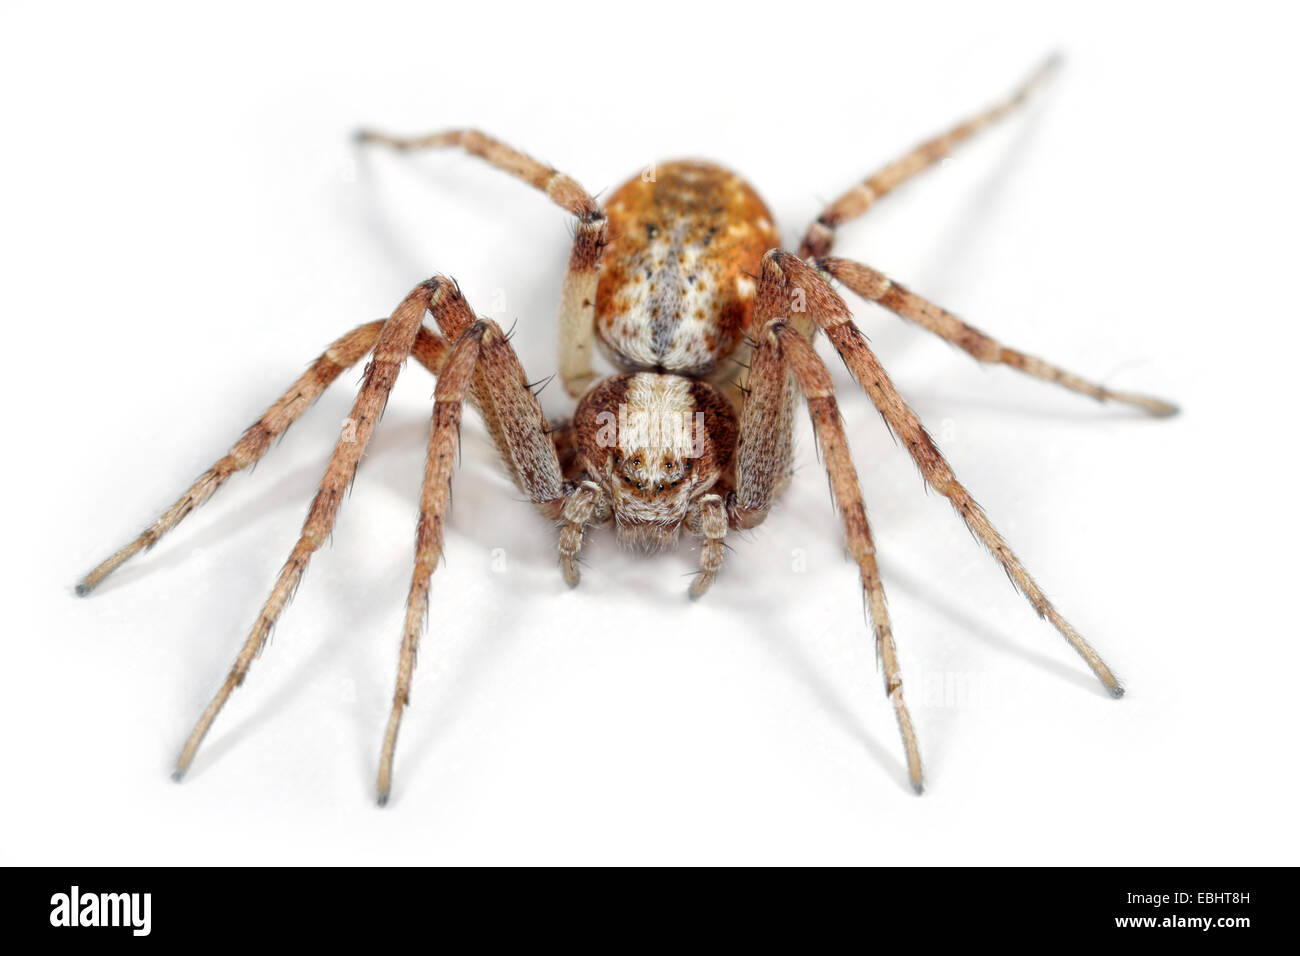 Female Philodromus cespitum spider on white background. Family Philodromidae, Running crab spiders. Stock Photo